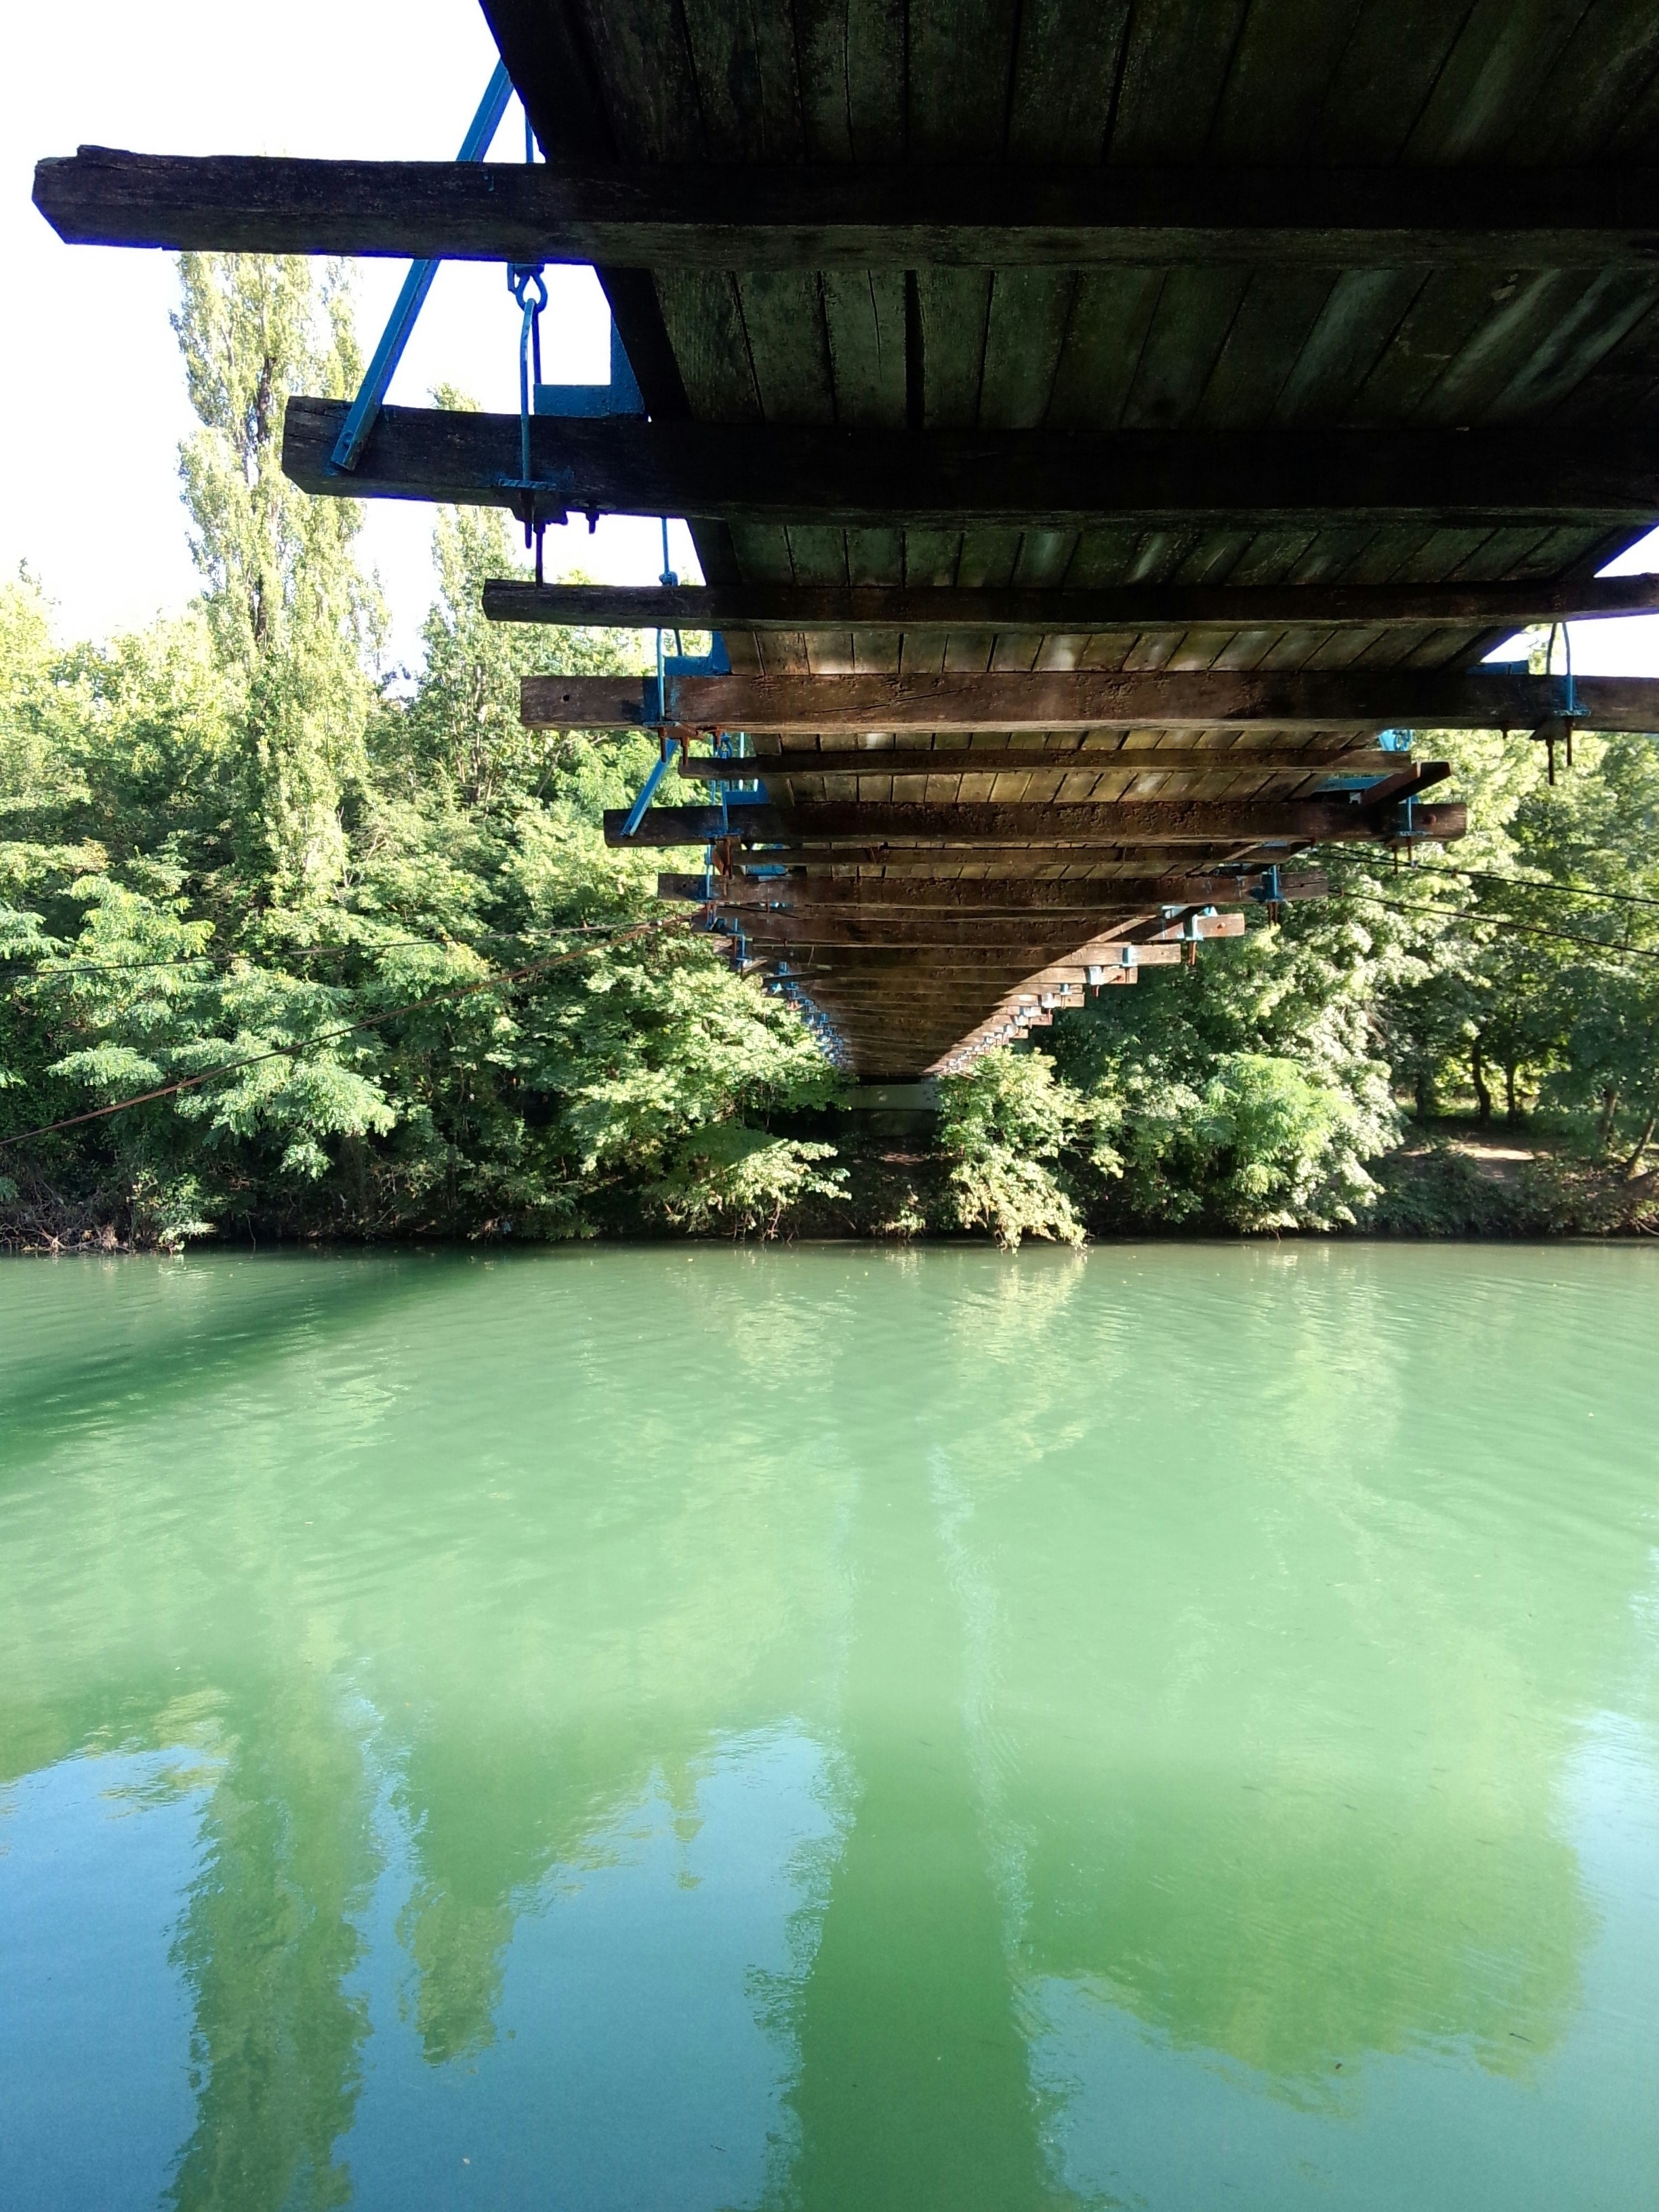 General 2448x3264 bridge water outdoors under bridge green river nature